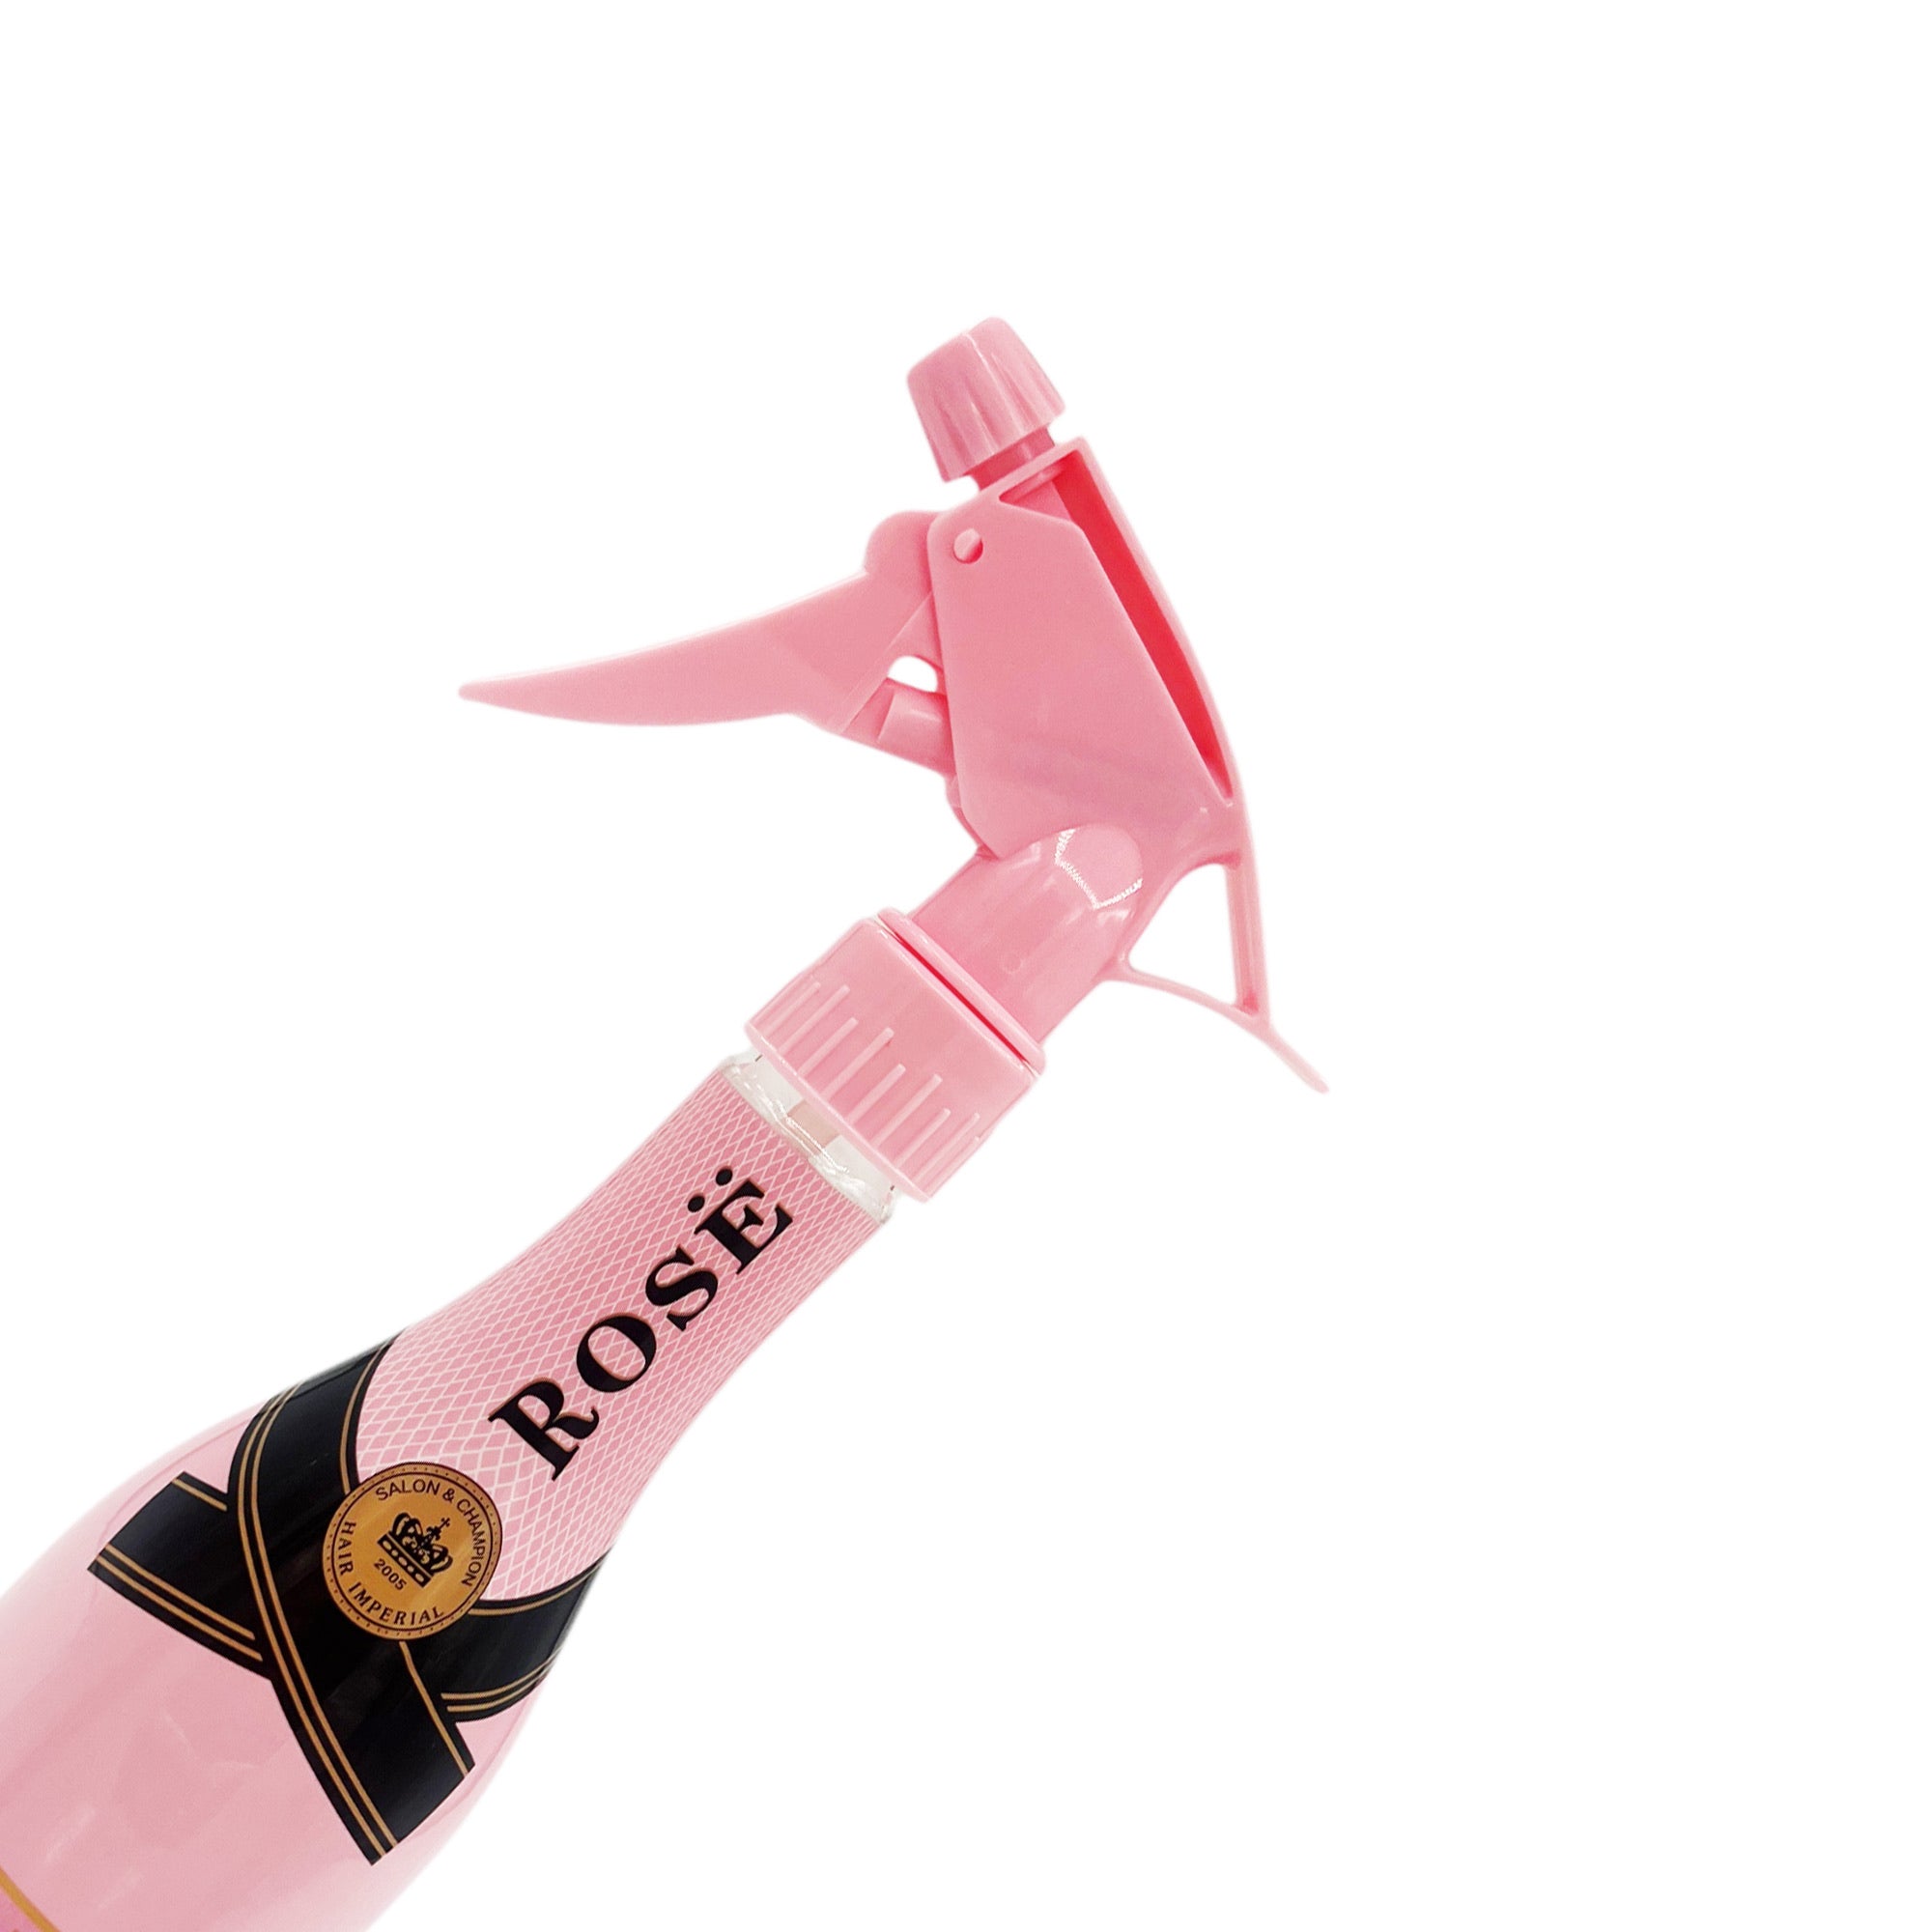 Eson - Water Spray Bottle 280ml Extreme Mist Sprayer Champagne Style (Pink) - Eson Direct